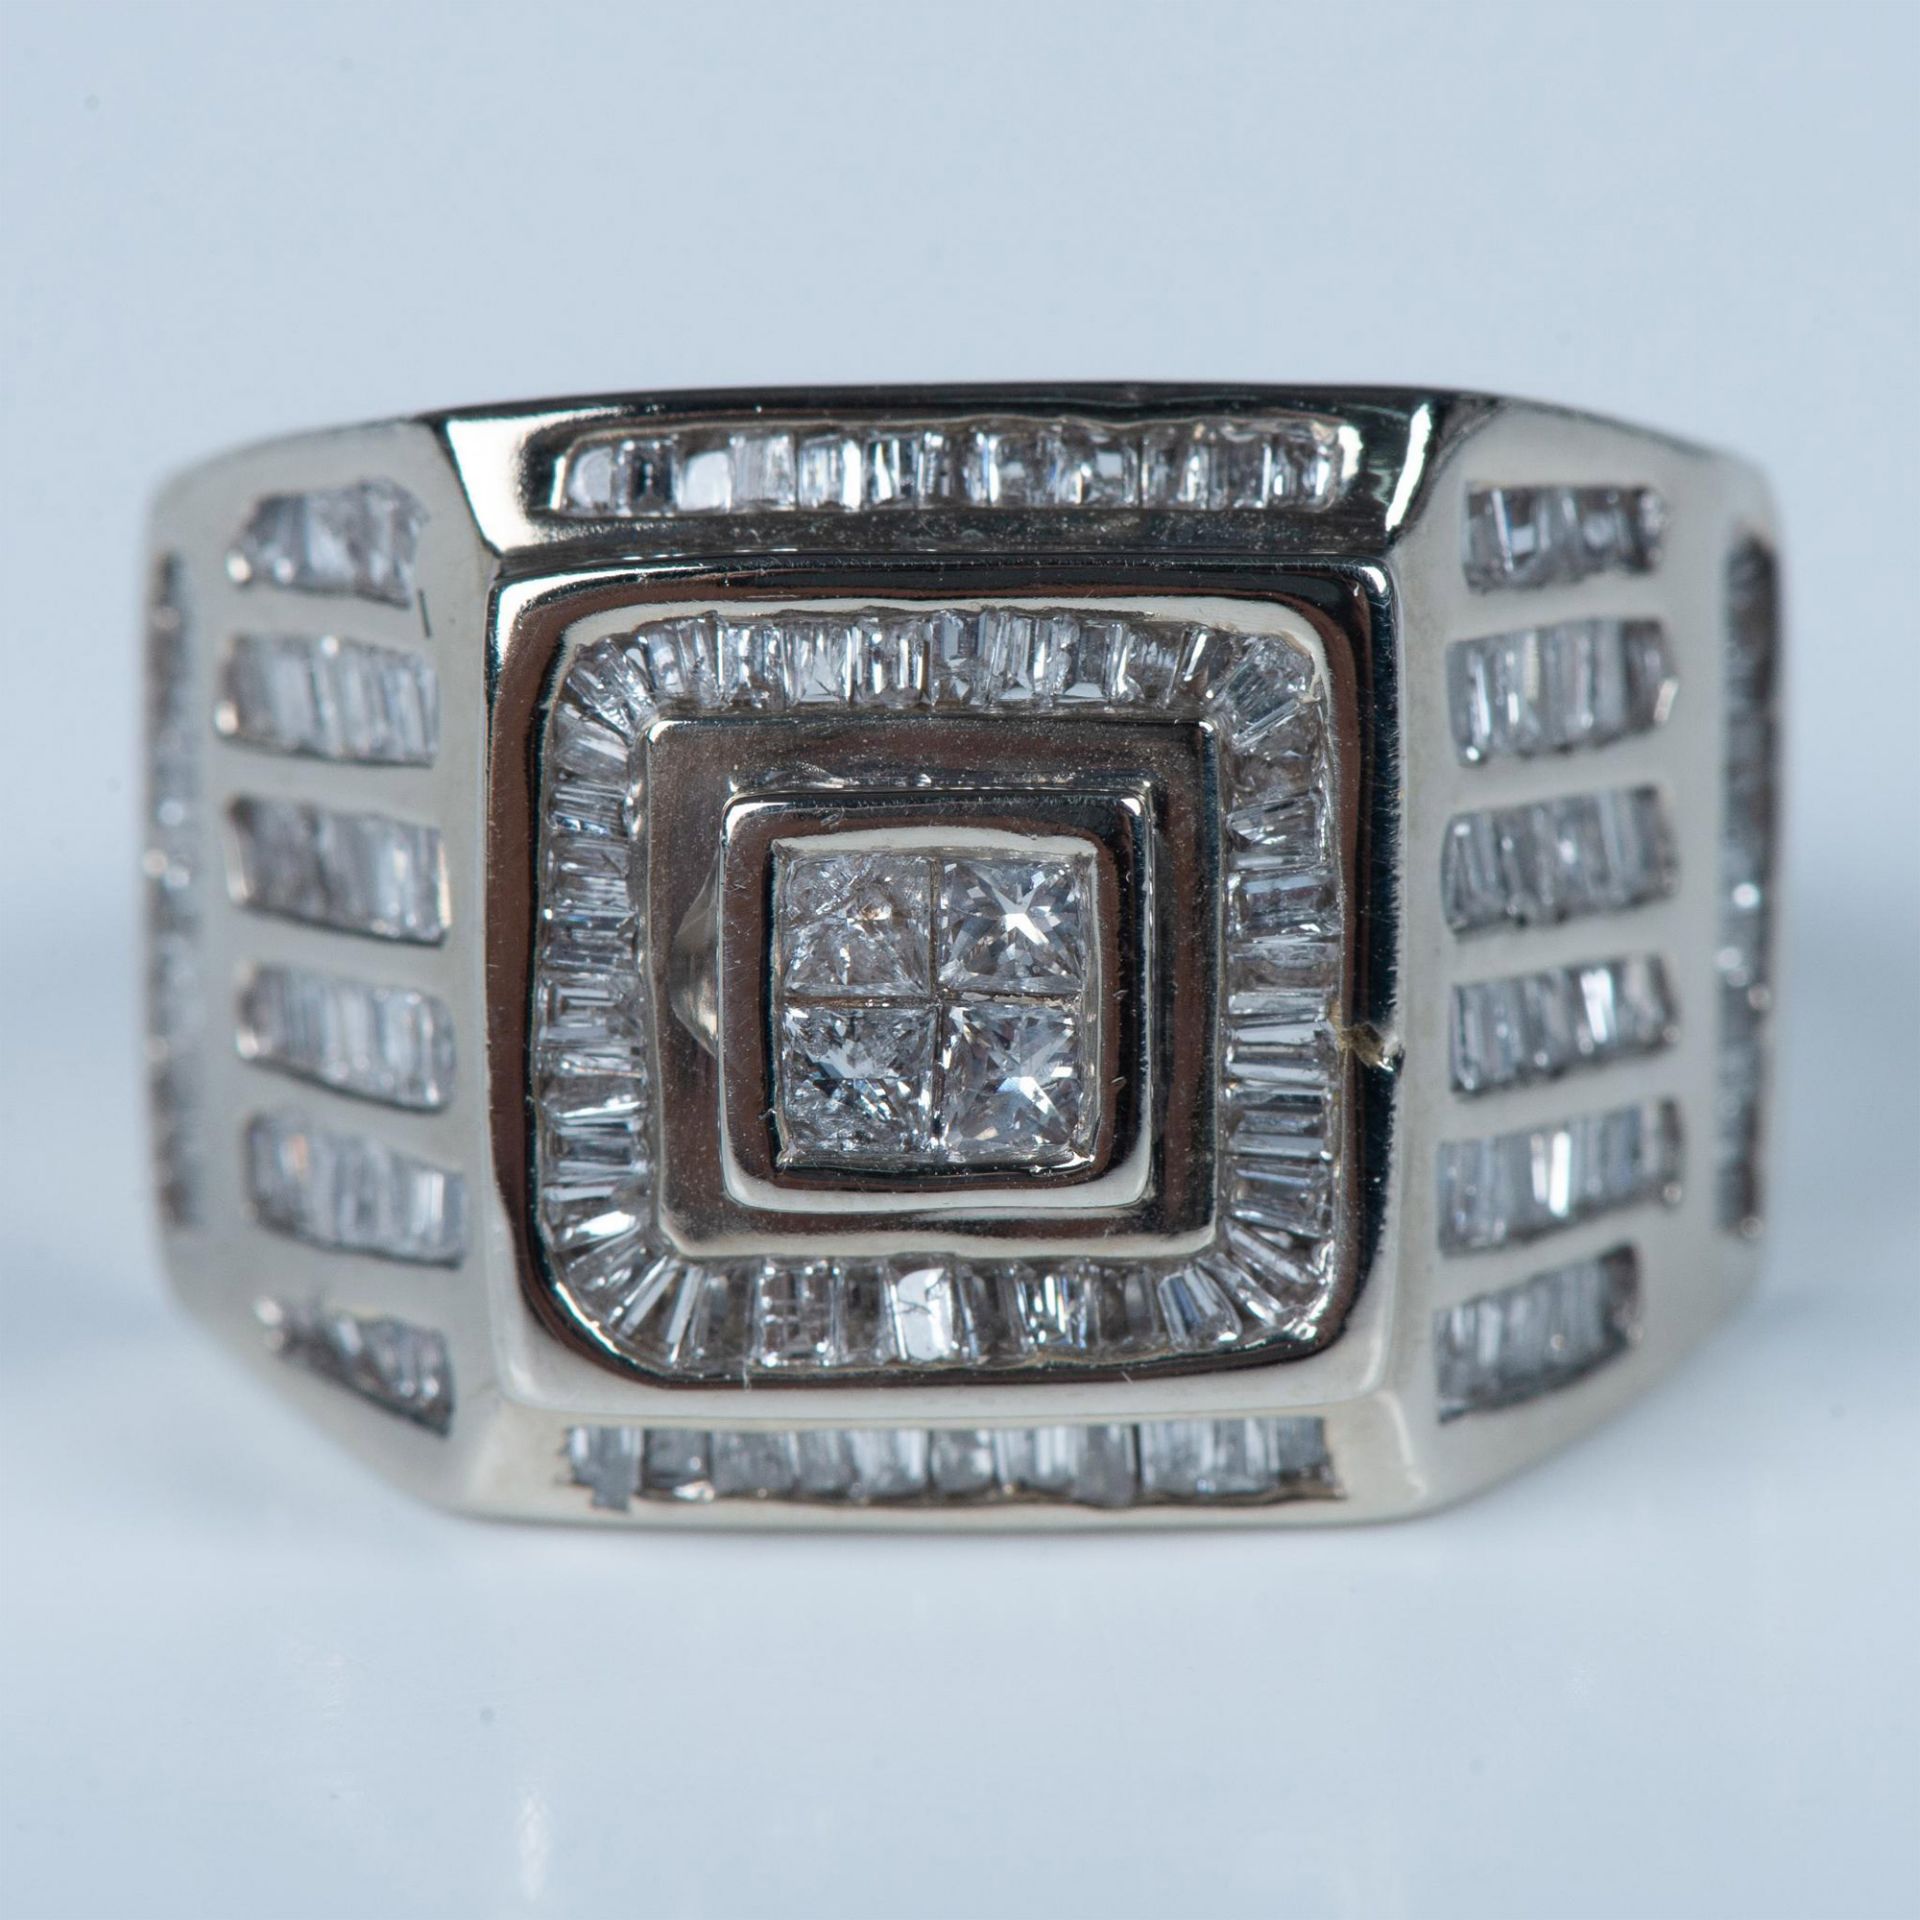 Striking 14K White Gold and 132-Diamond Ring - Image 2 of 7